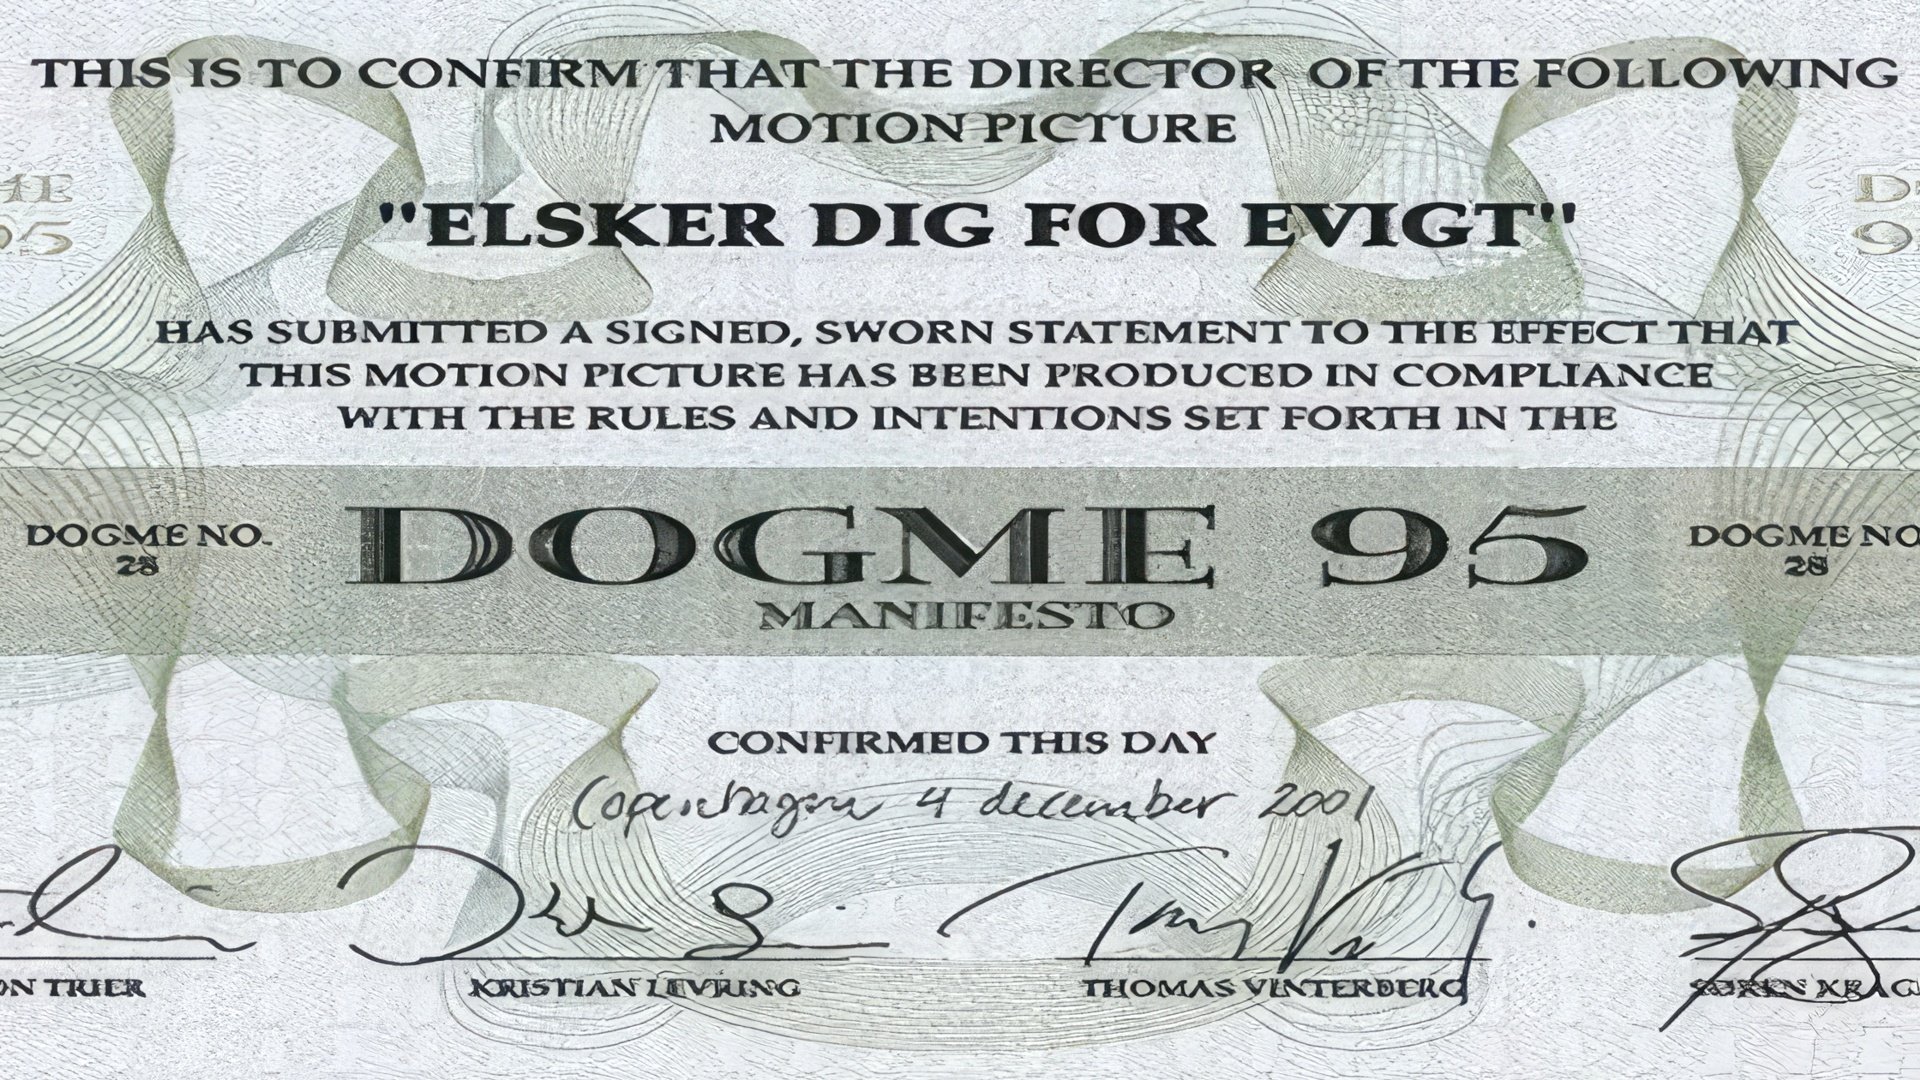 Lars von Trier and Thomas Vinterberg Released Dogme 95 Manifesto